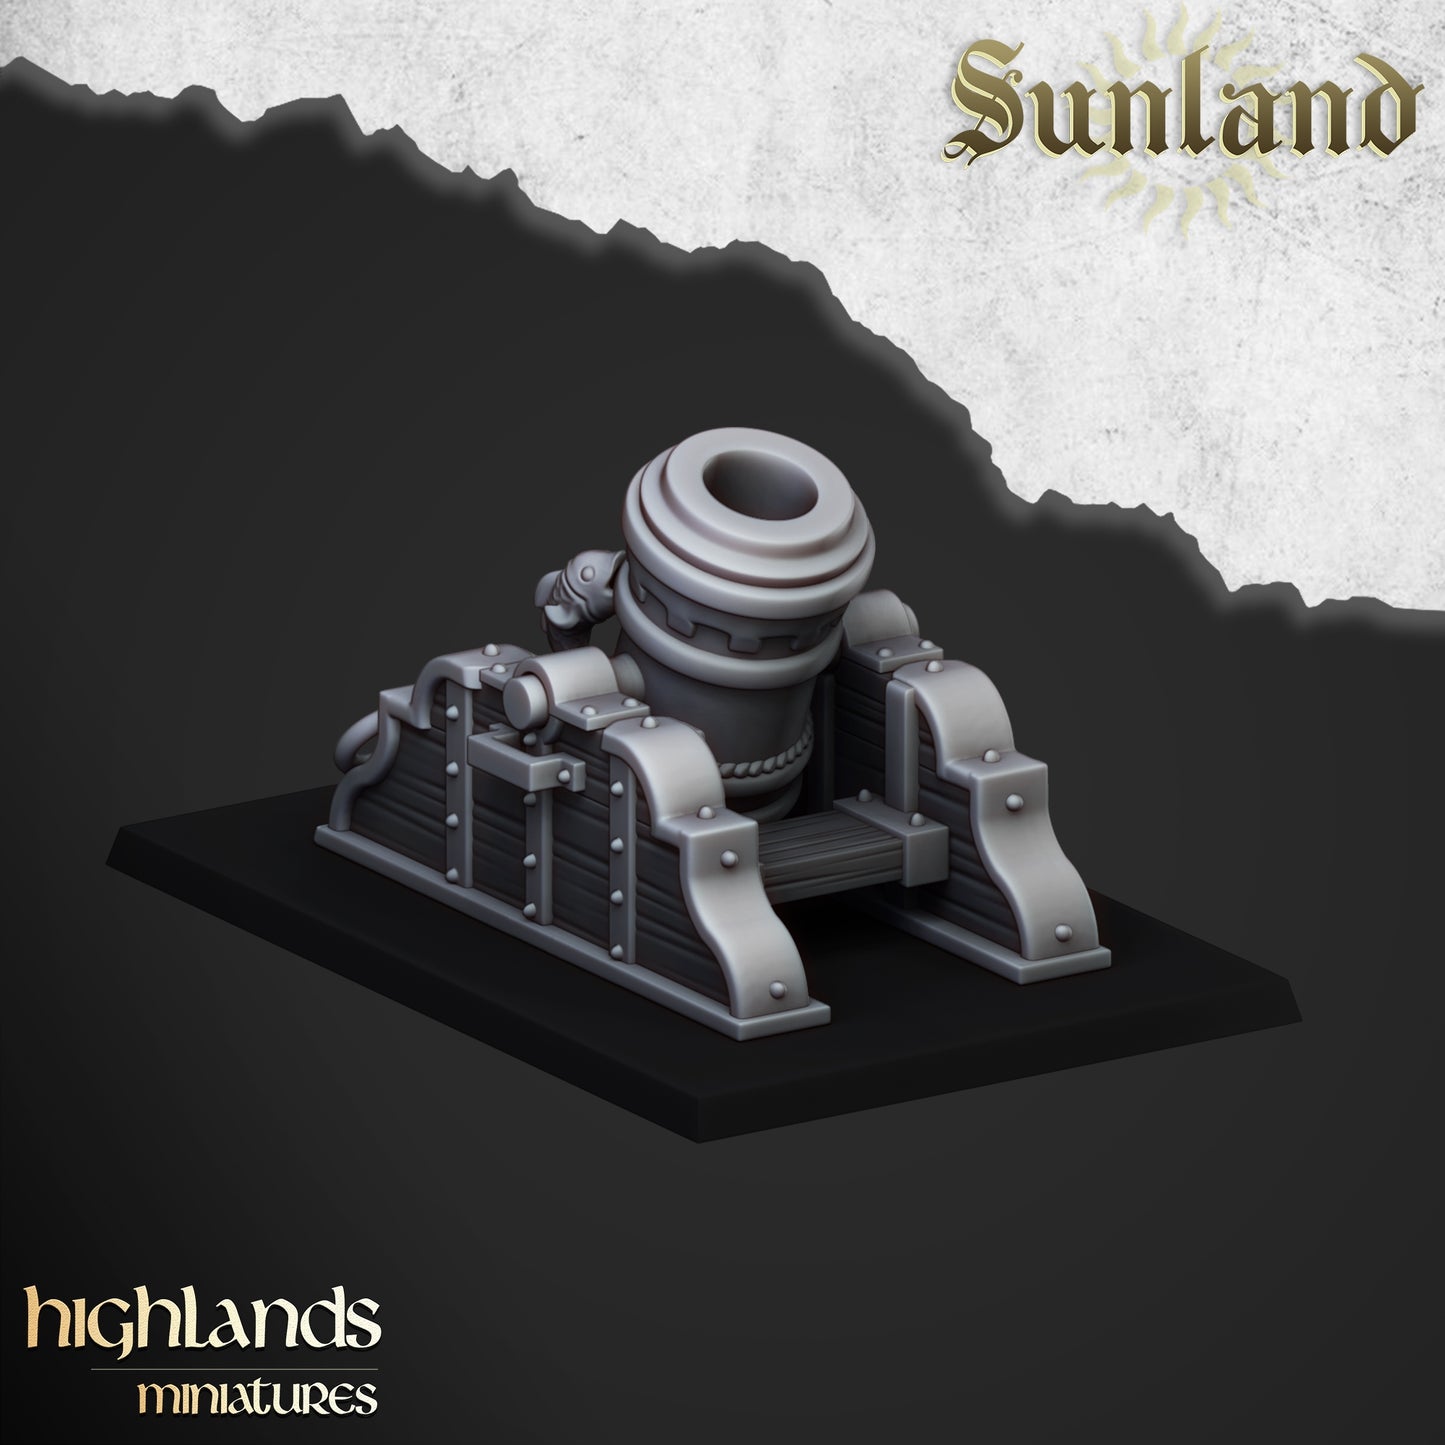 Sunland Artillery Units from Highlands Miniatures